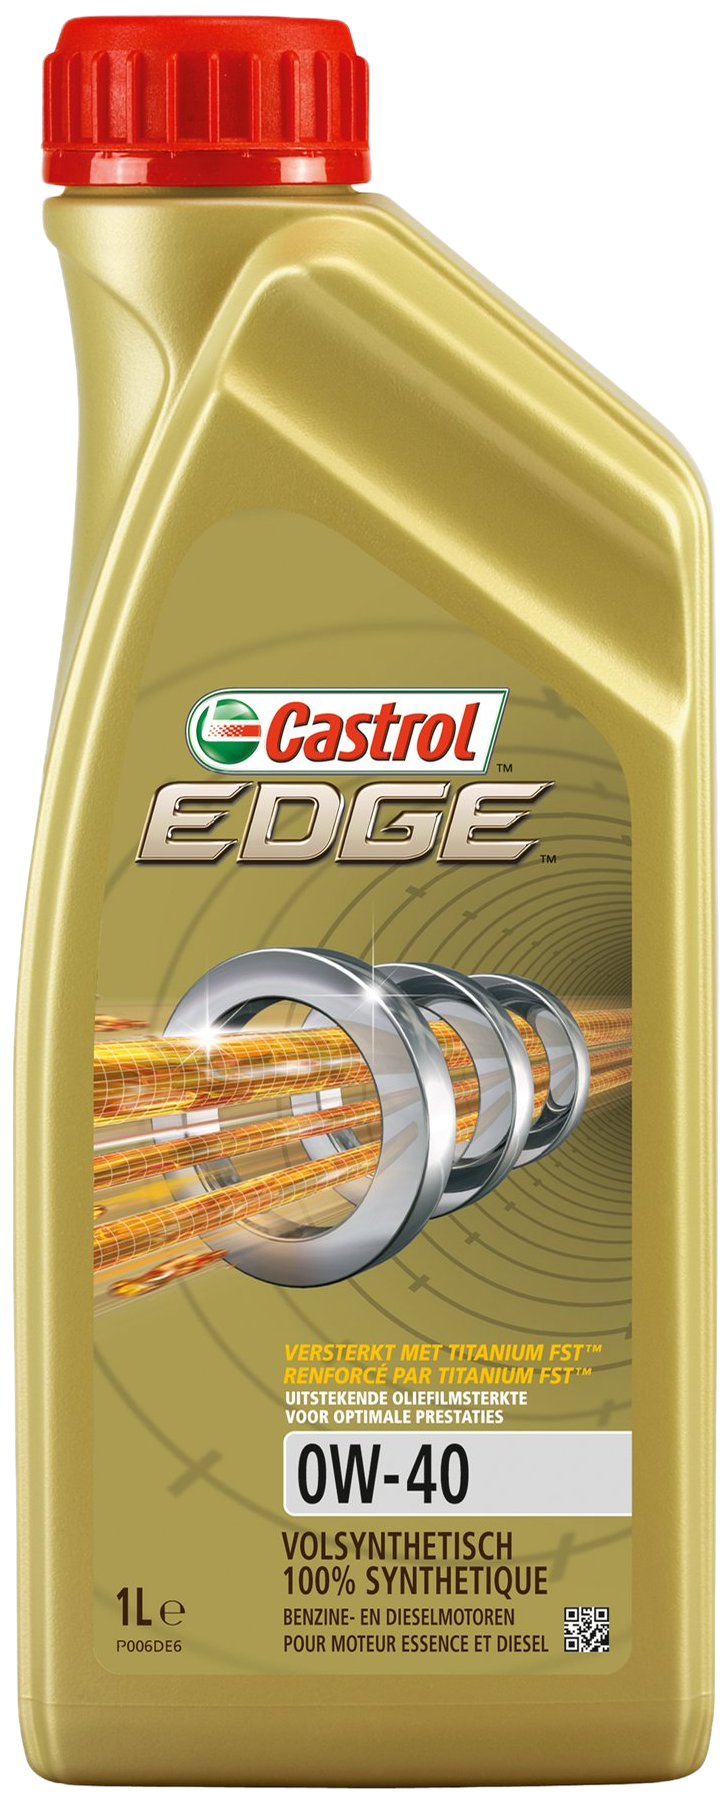 Castrol EDGE 0W-40, 1 lt